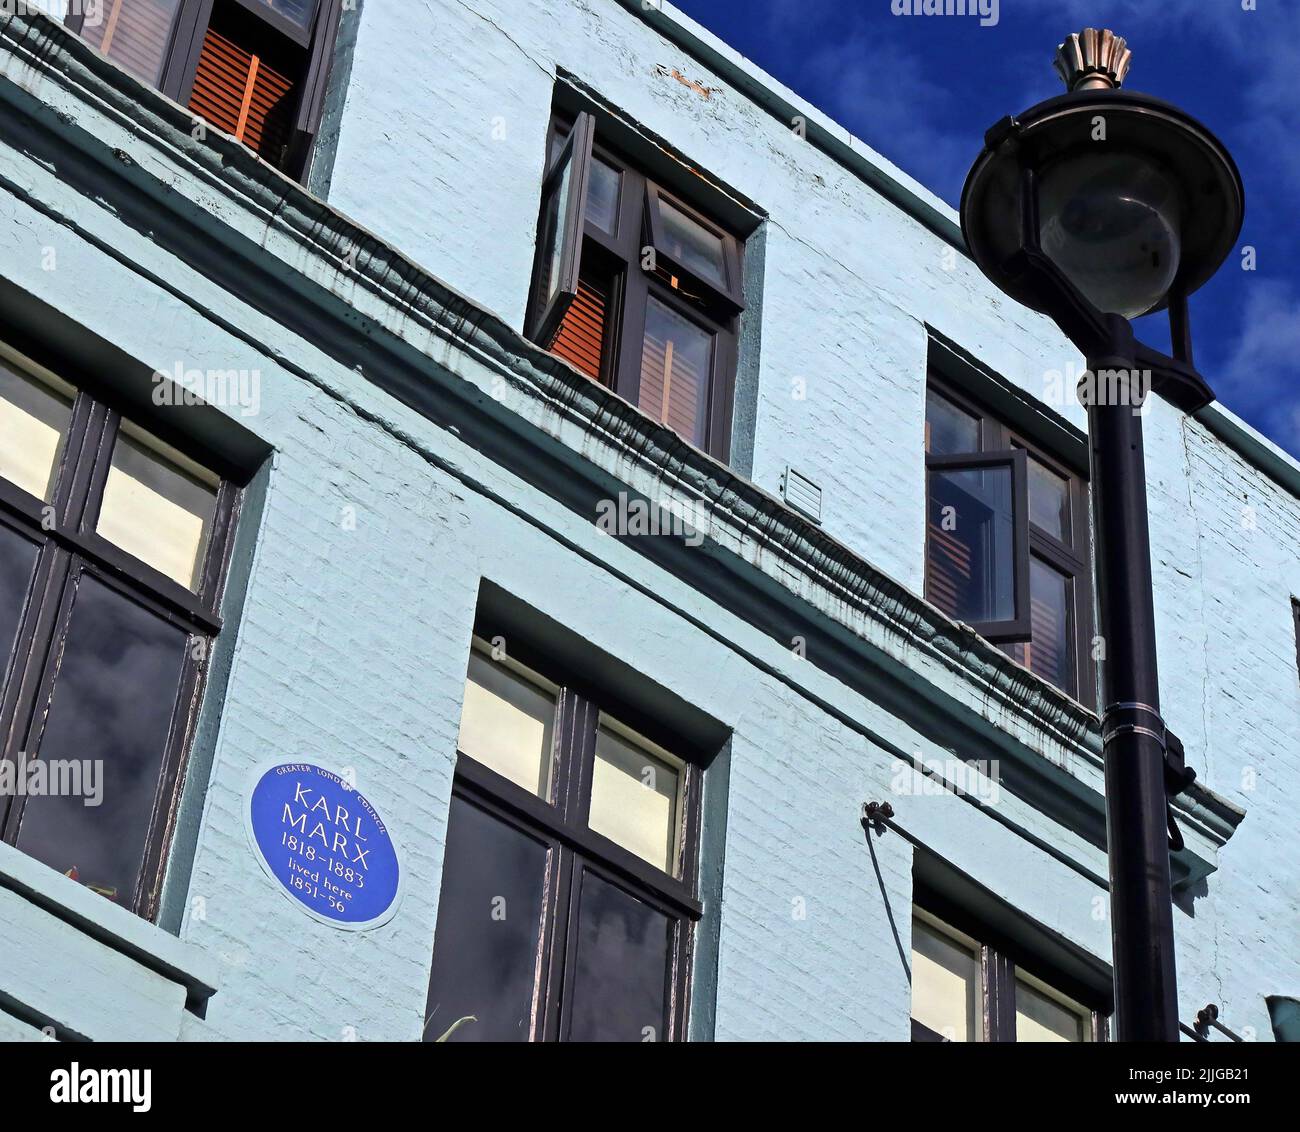 GLC blue plaque, indicating the Karl Marx 1851-56 house, at 28 Dean Street, Soho, London, England, UK, W1D 4QH Stock Photo